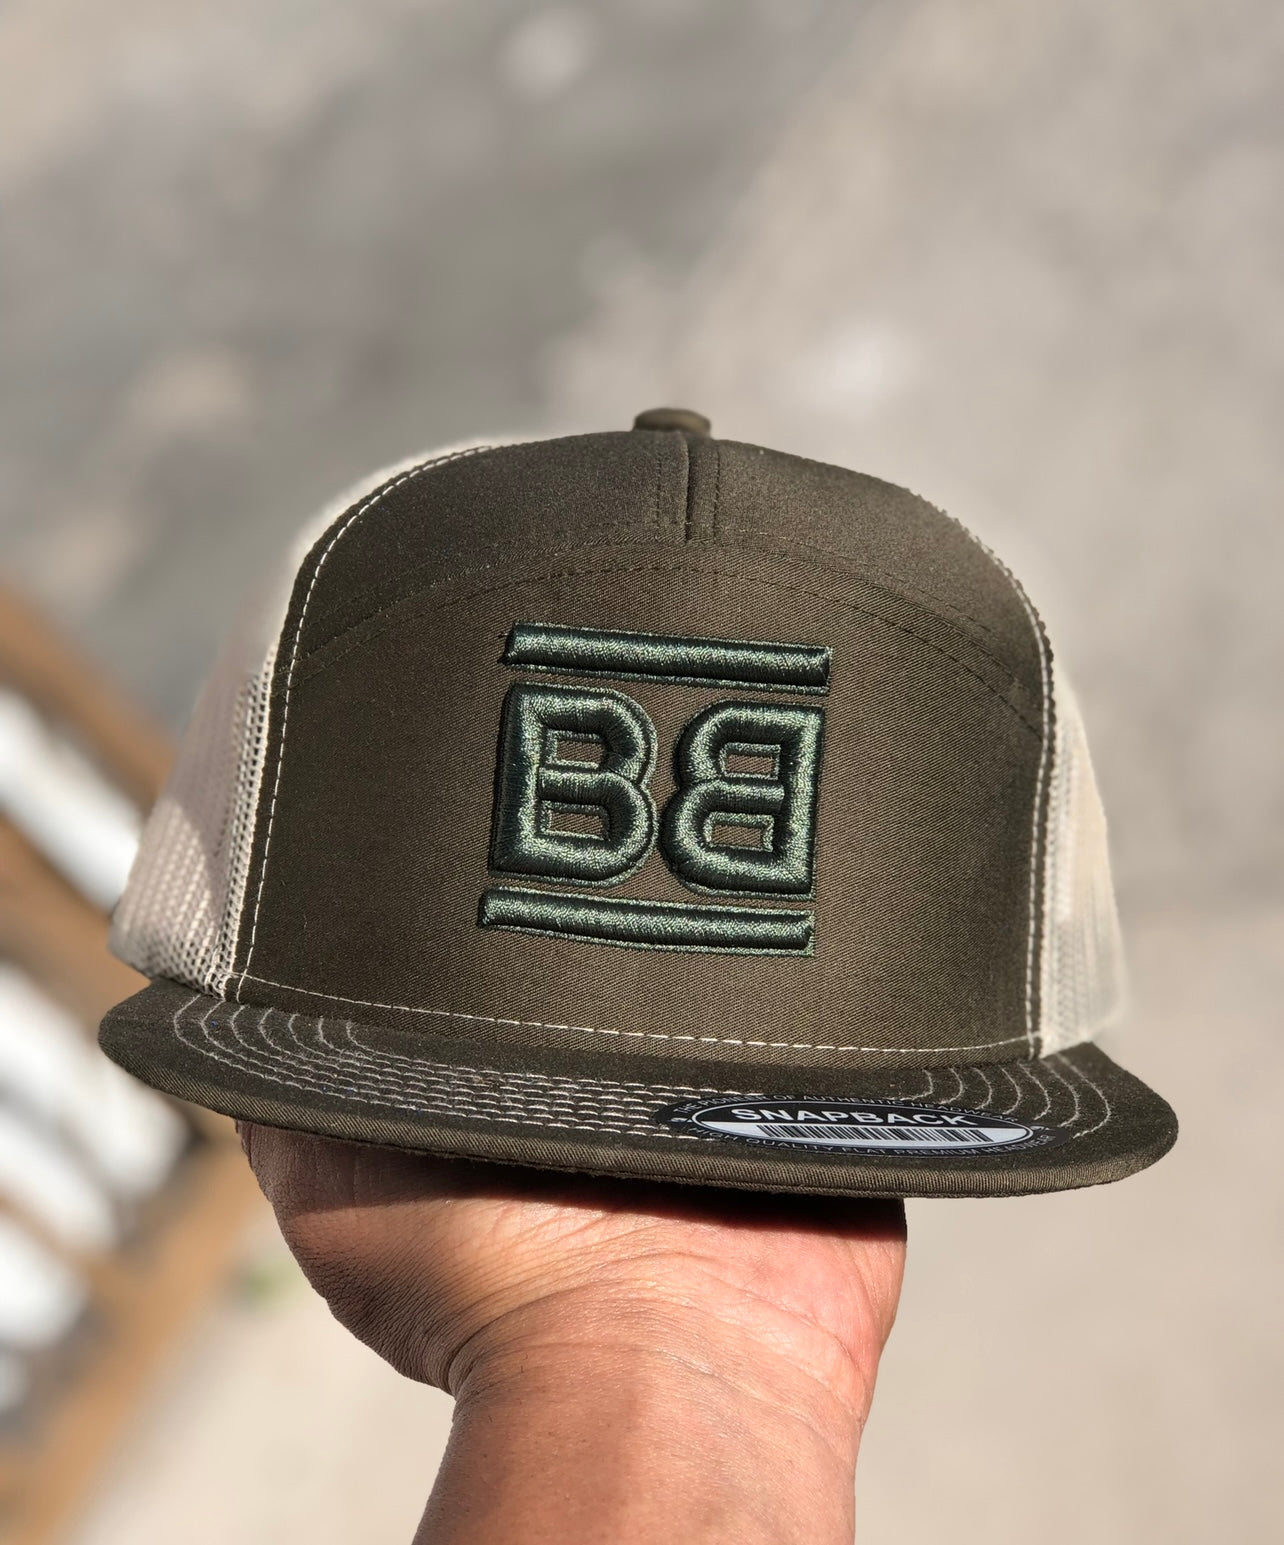 GreenB cap by Boltsbootsbrand